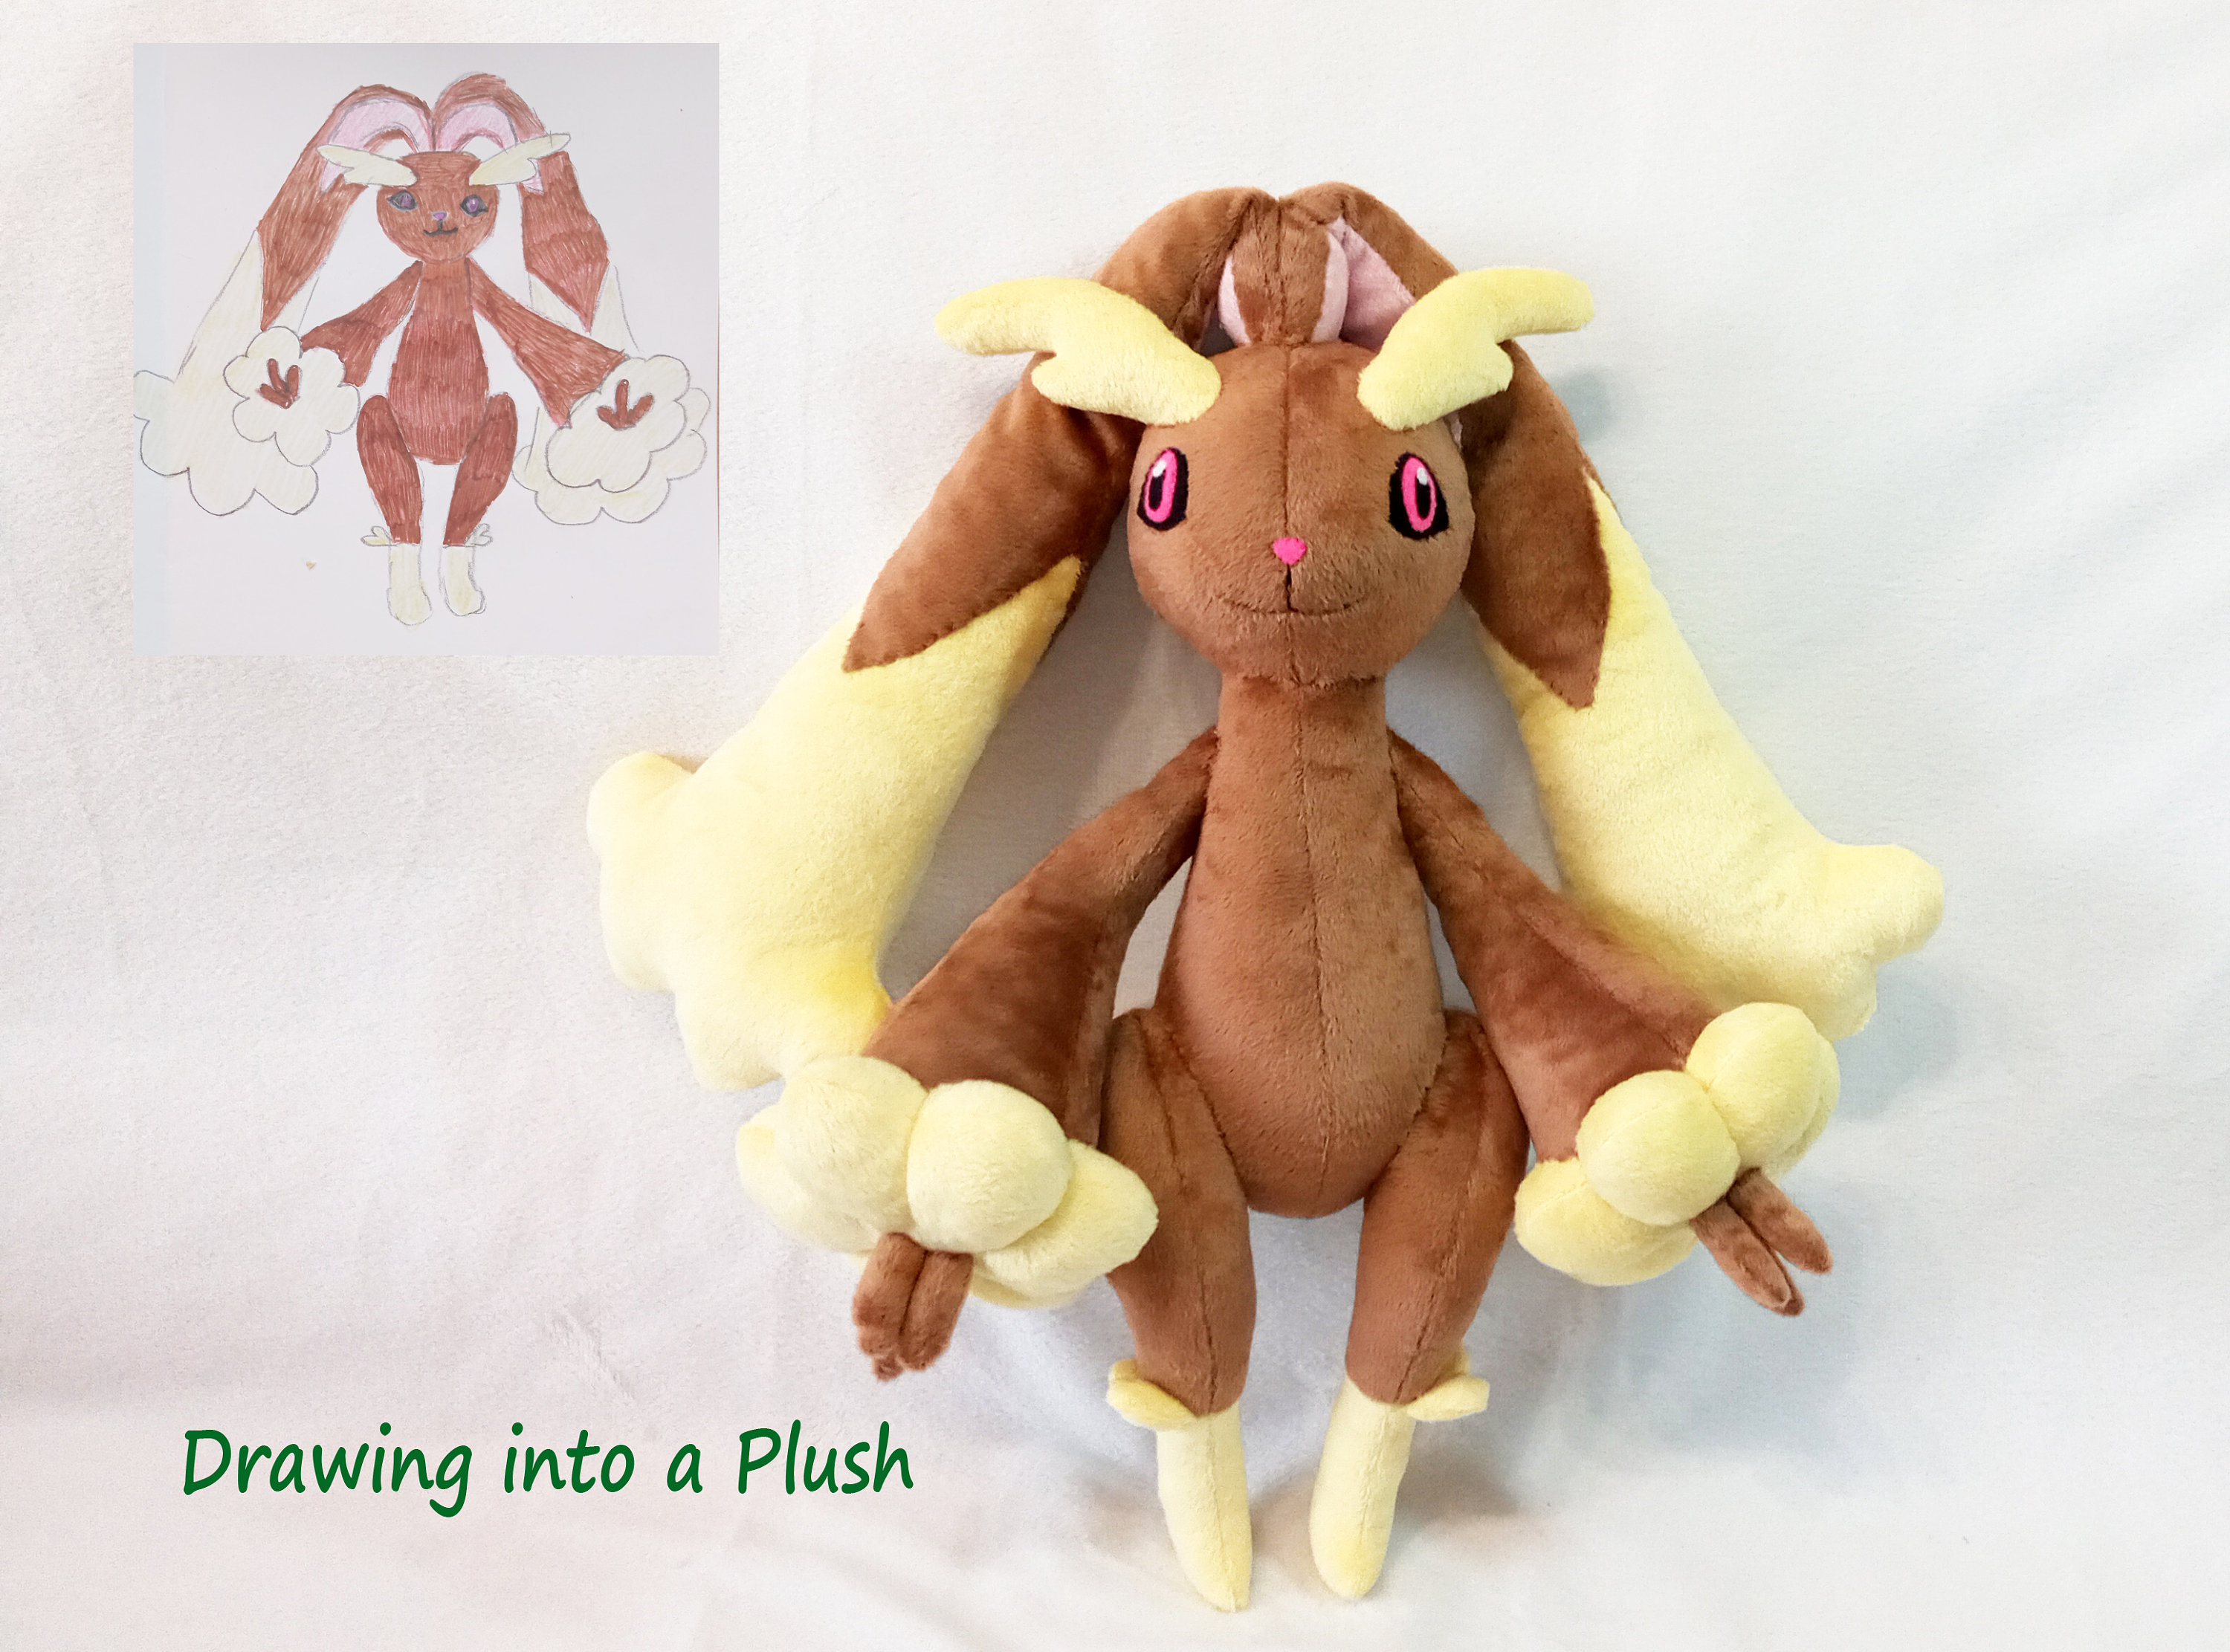 Pokémon - Peluche Pikachu Dort 40 cm